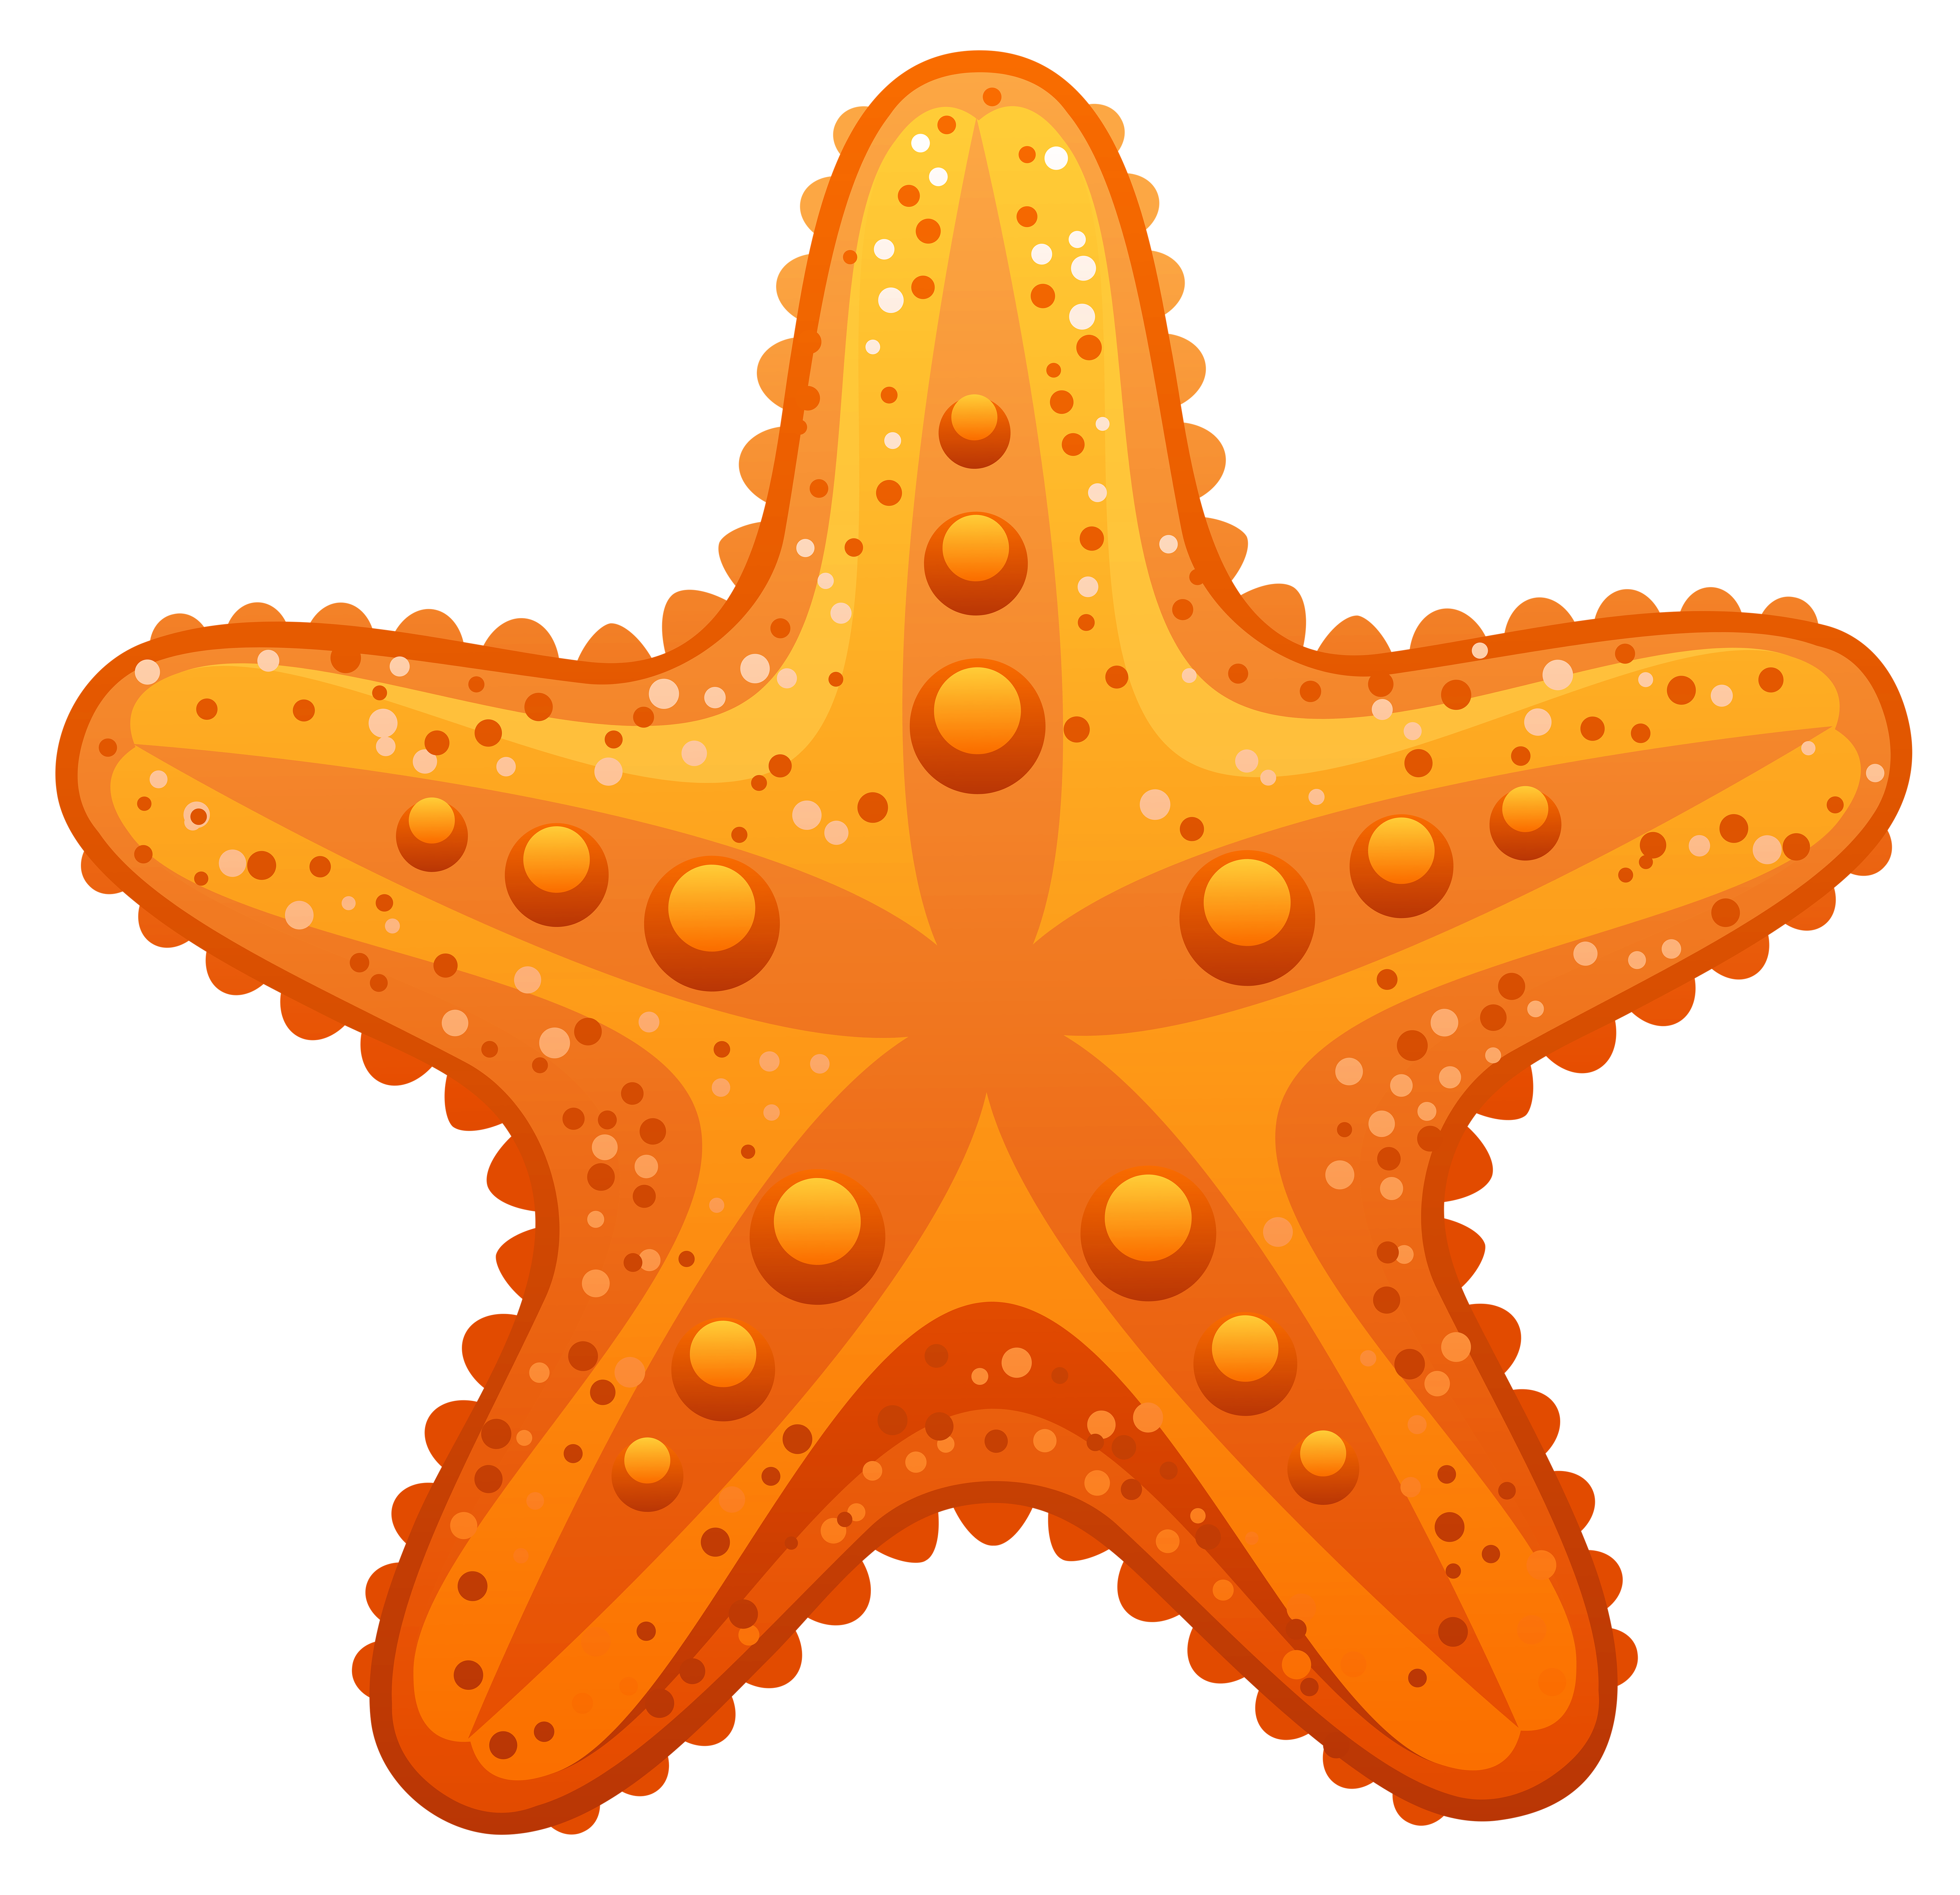 Free clip art starfish clipar